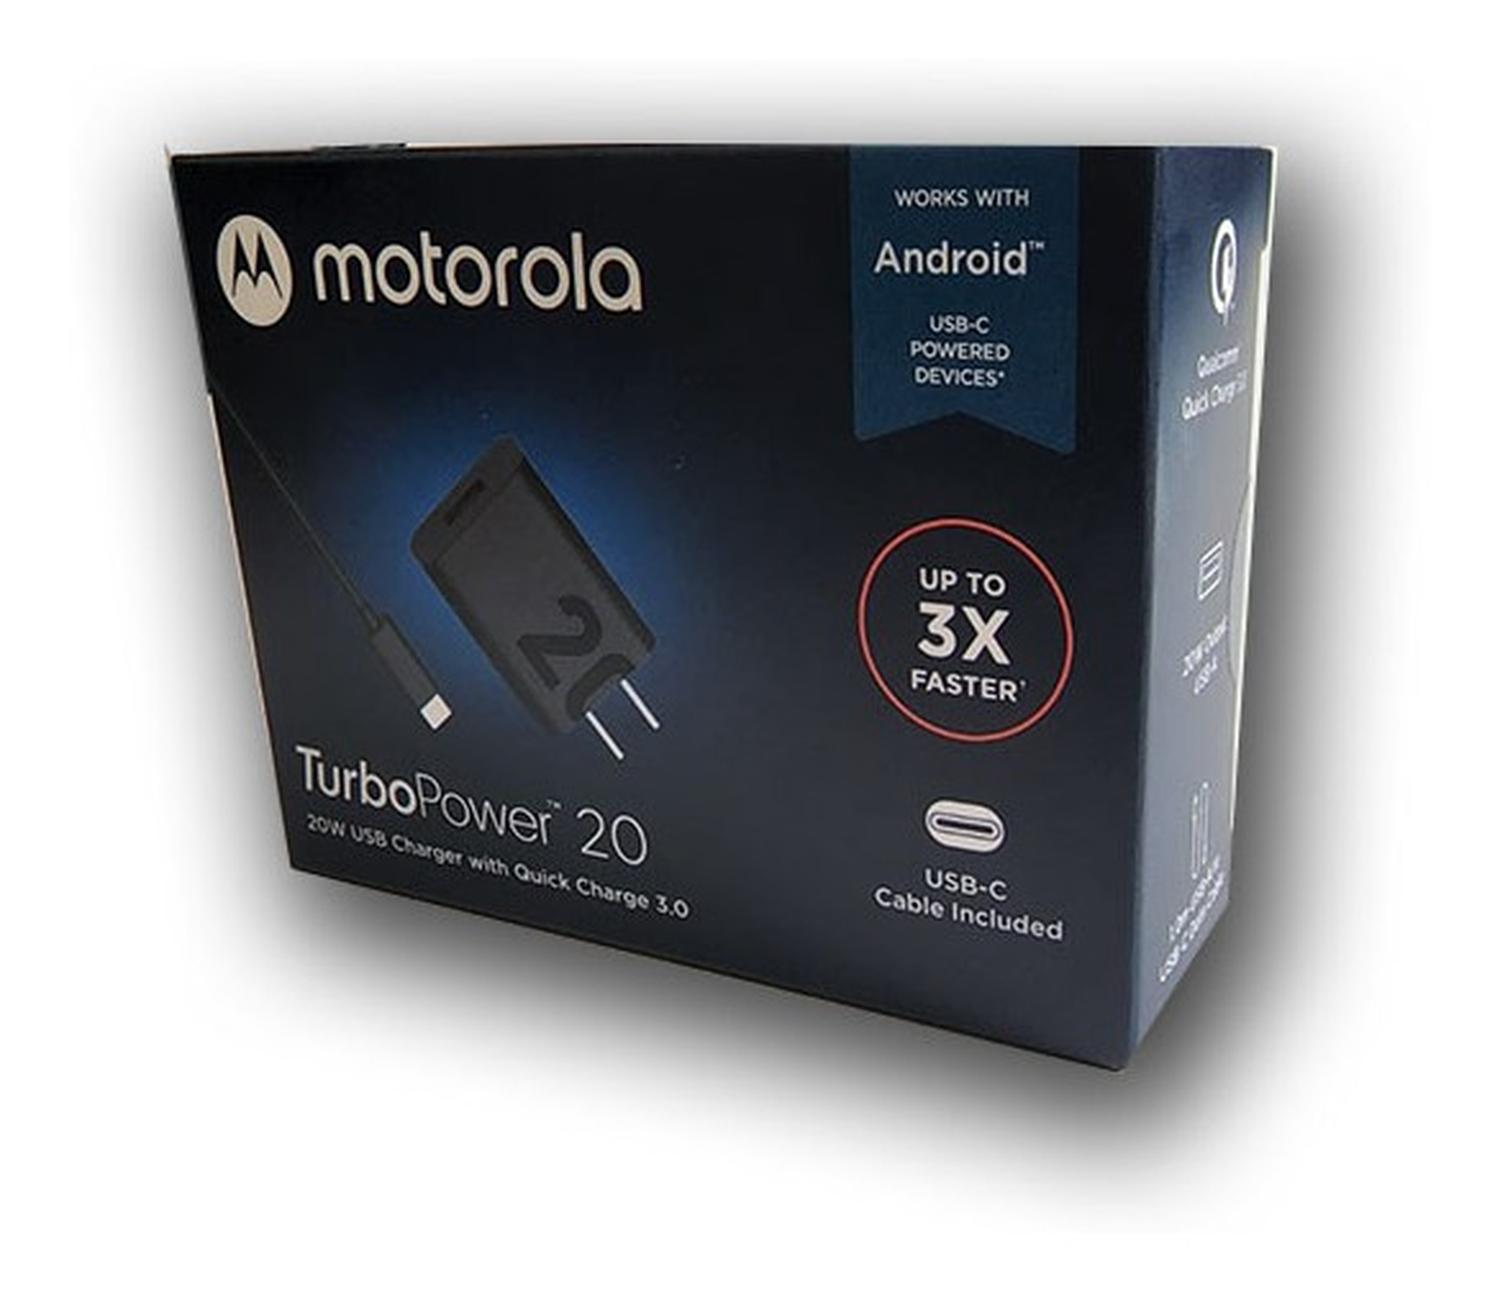 Motorola Cargador USB 20W Cable Micro USB carga rapida TurboPowe